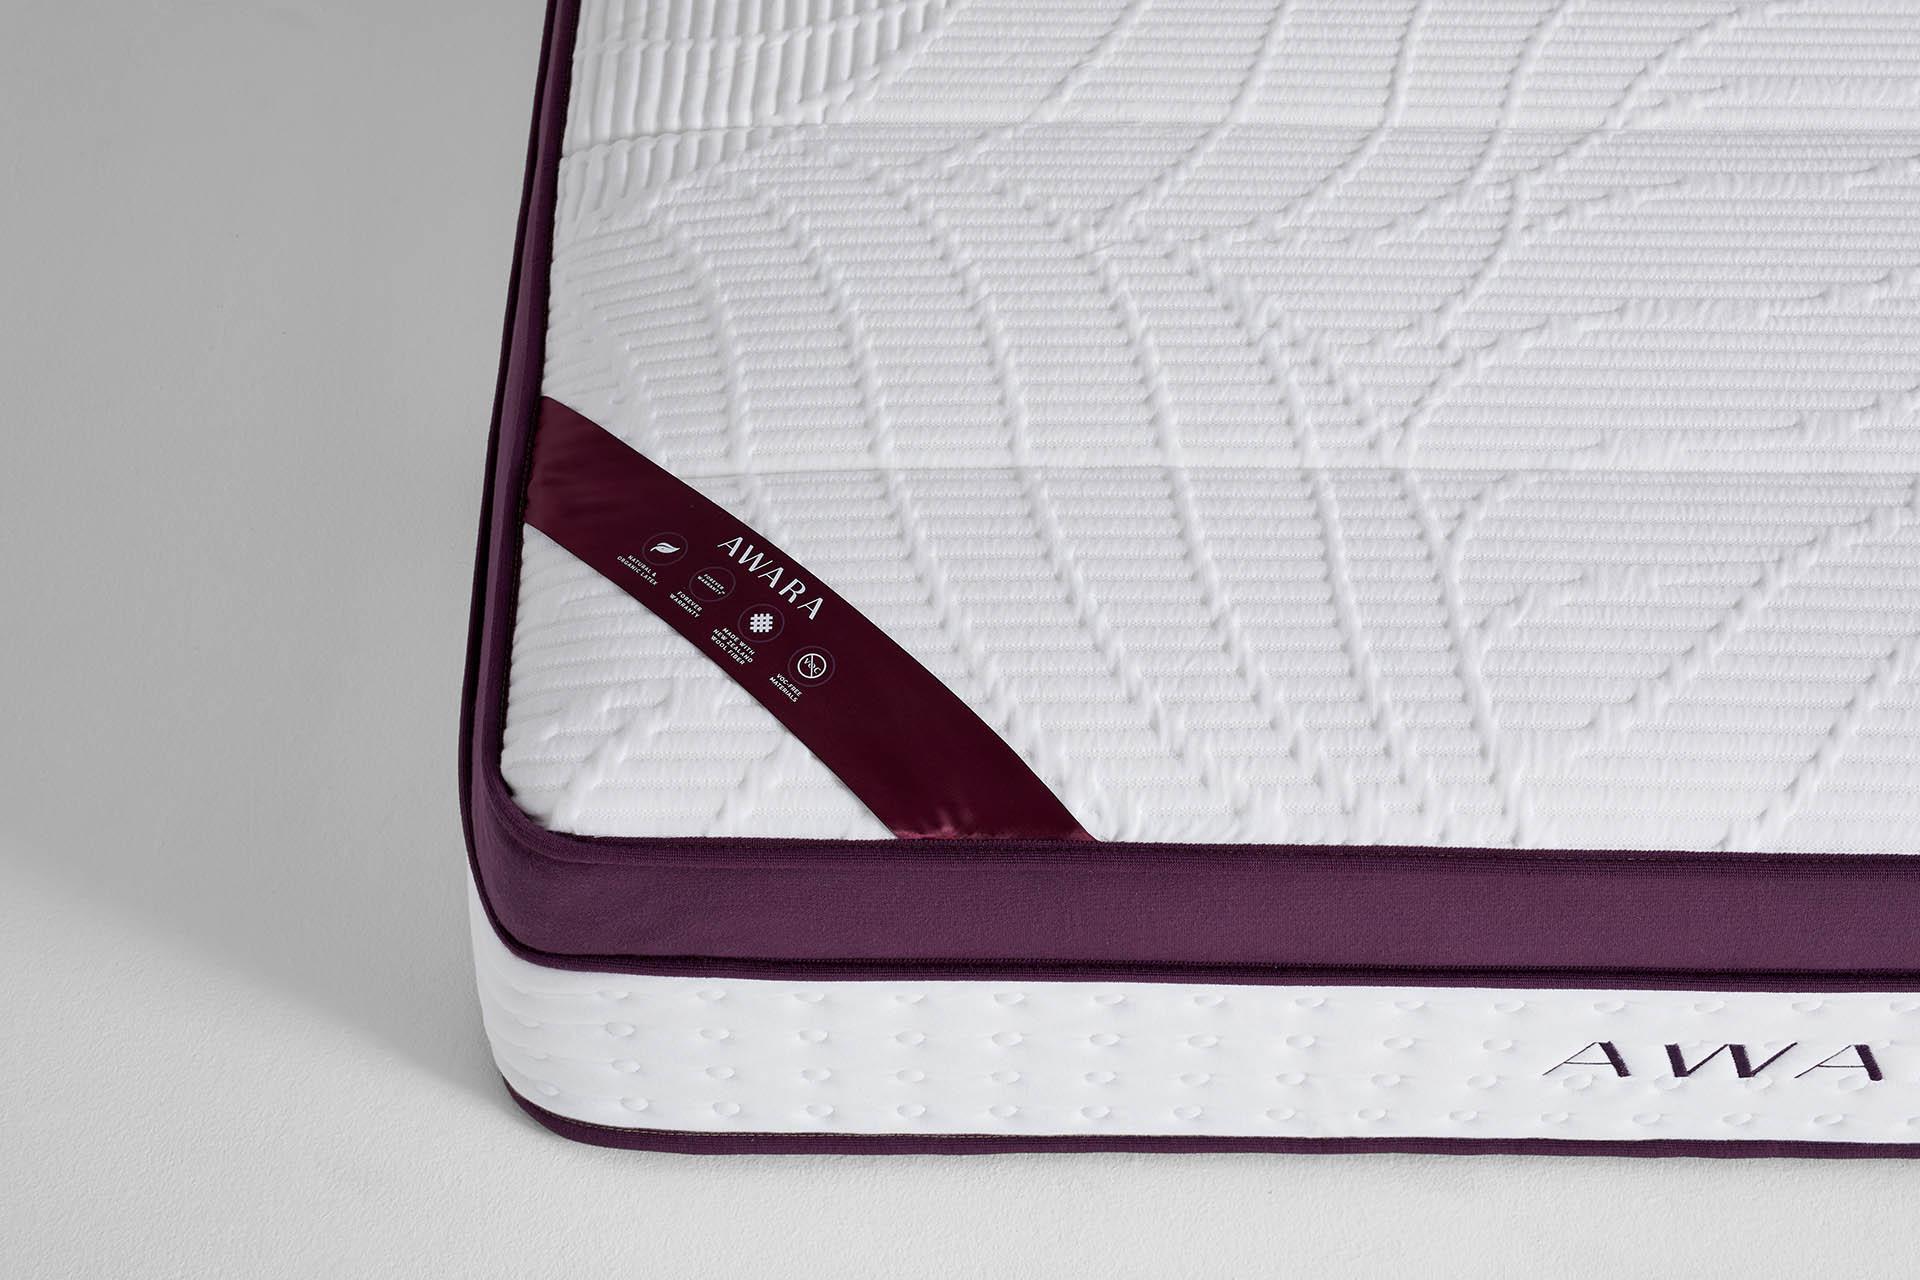 Awara_Premier_latex mattress review 2